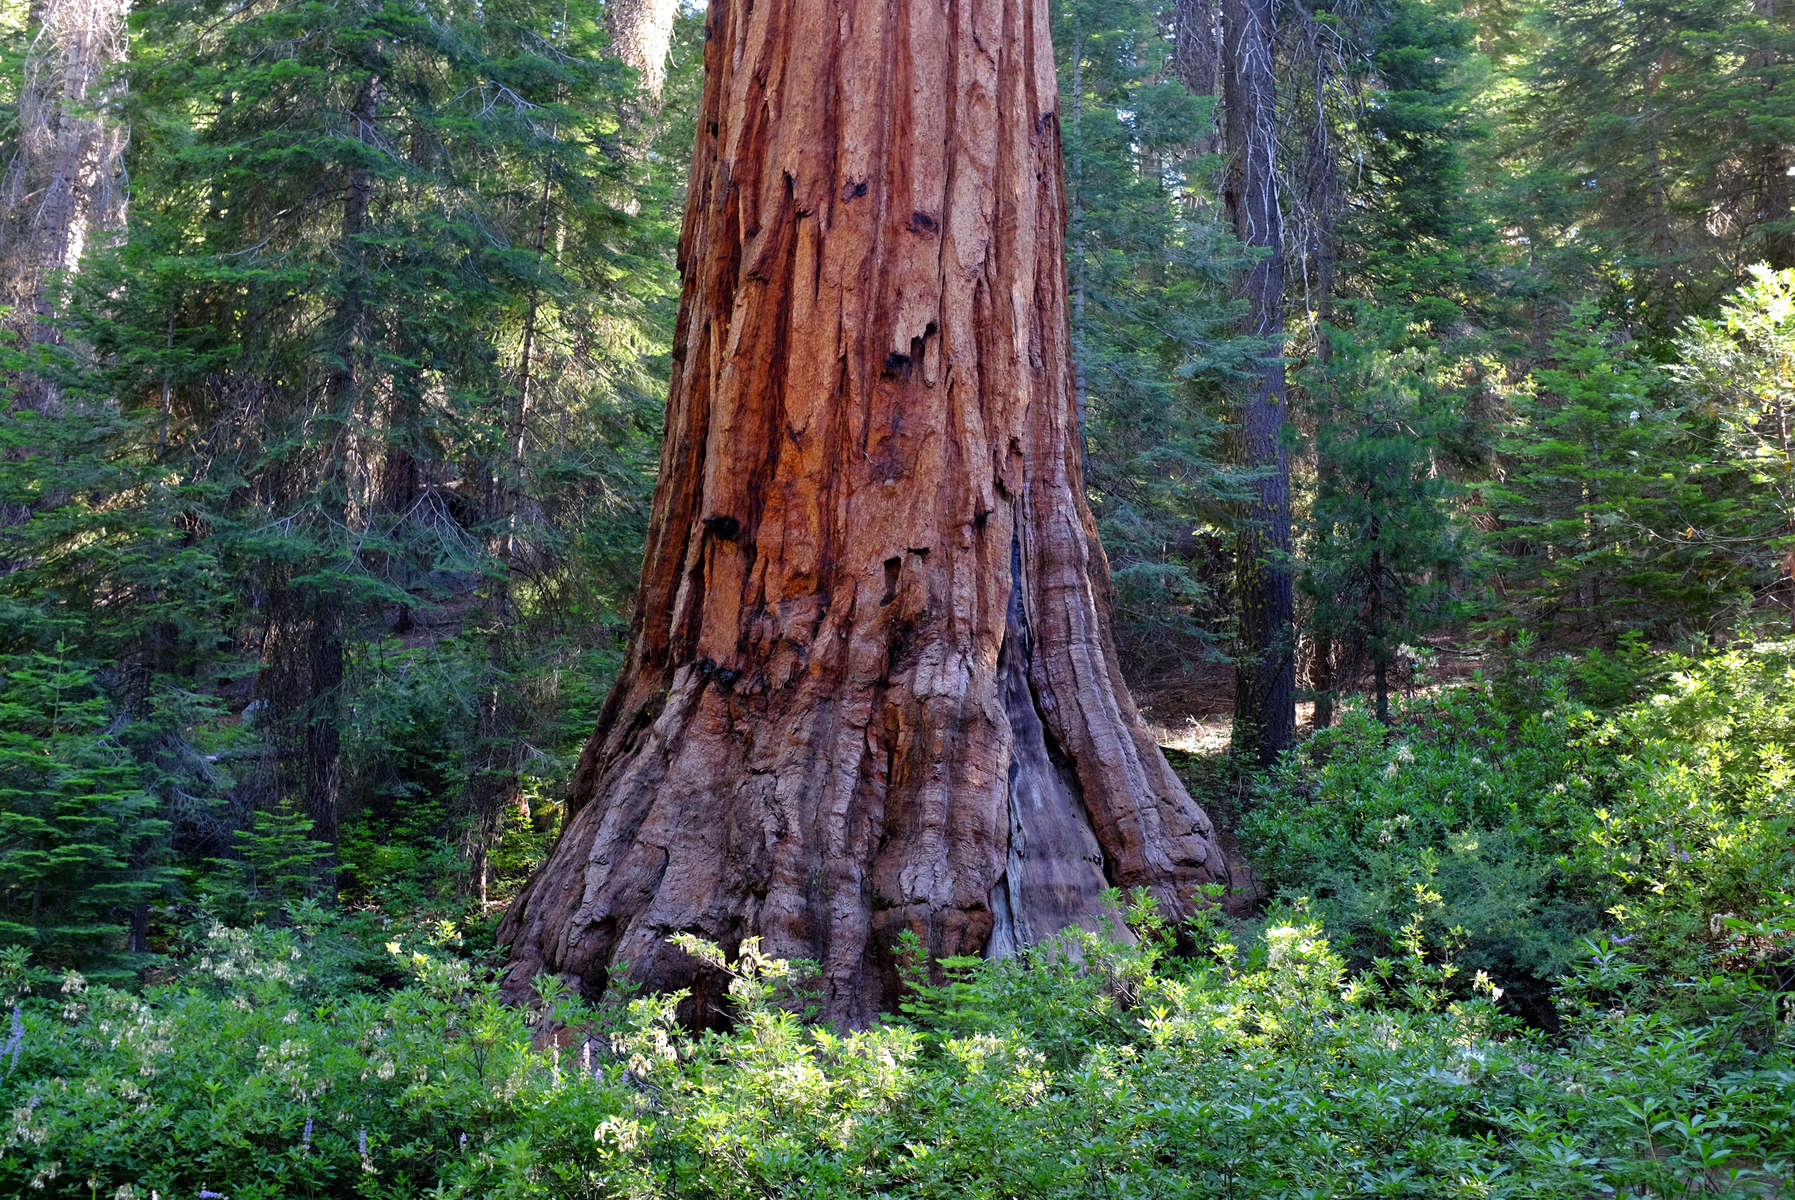 Giant Sequoia, Yosemite National Park